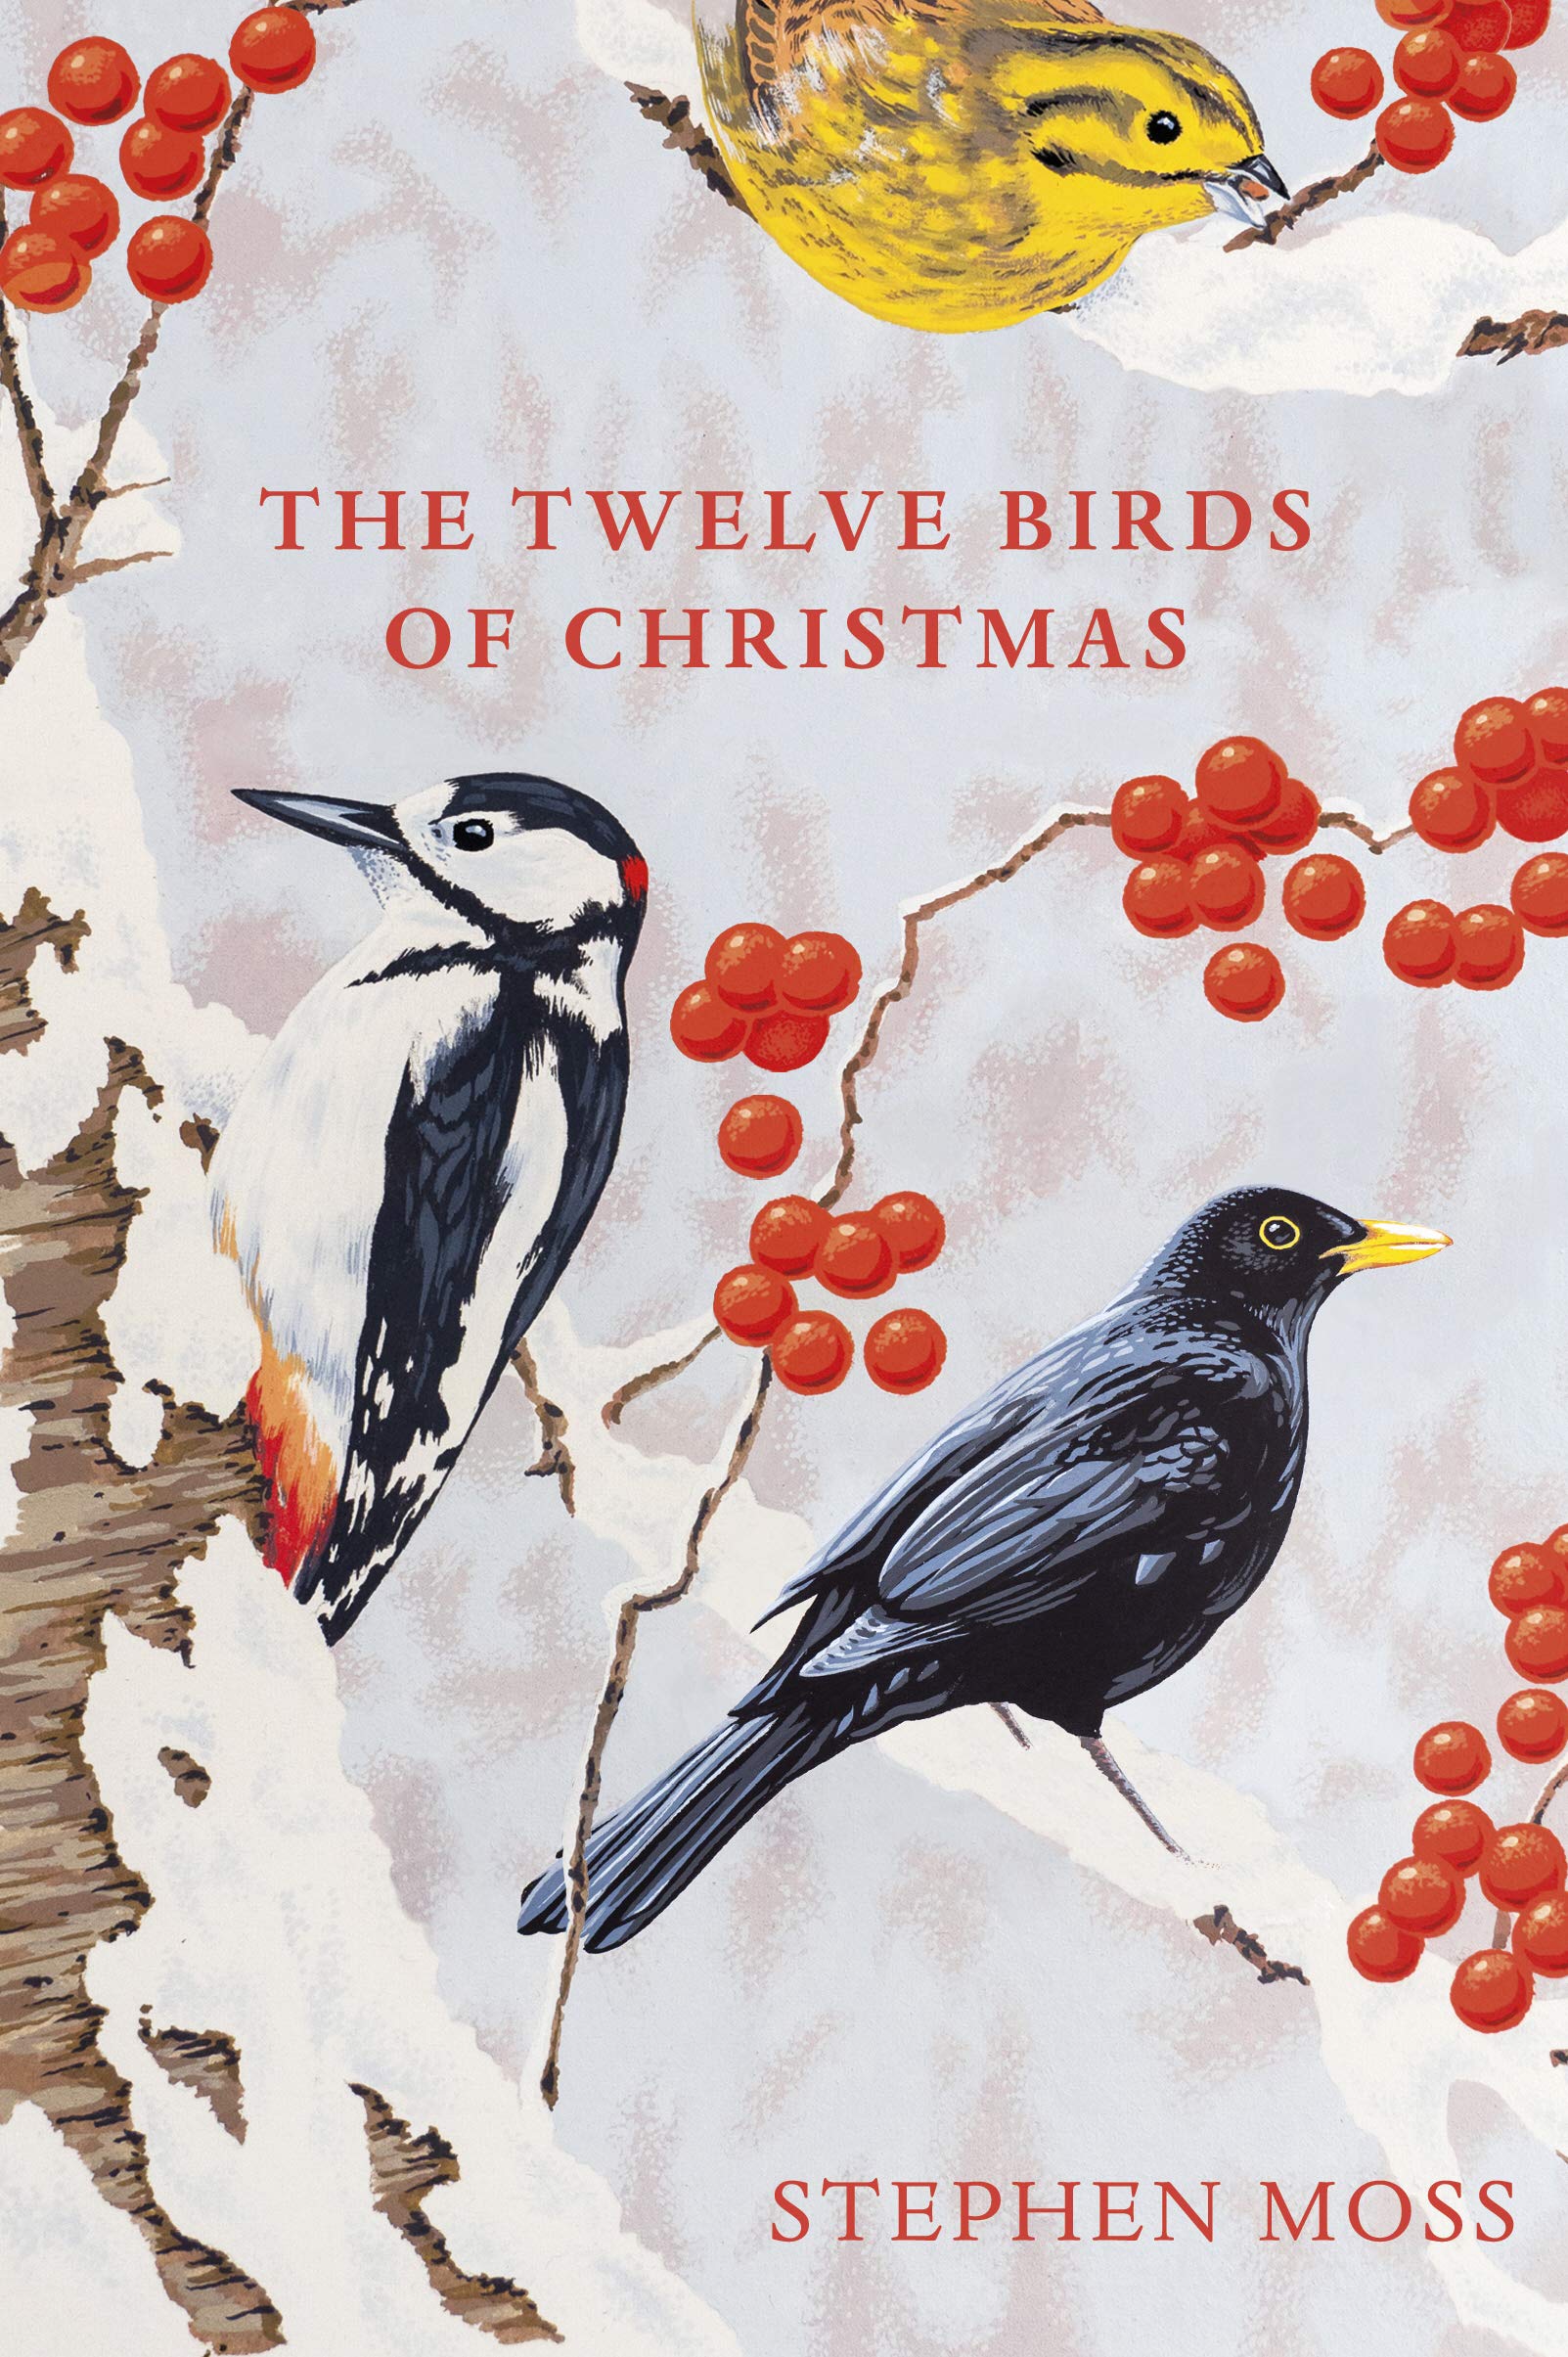 The Twelve Birds of Christmas by Stephen Moss